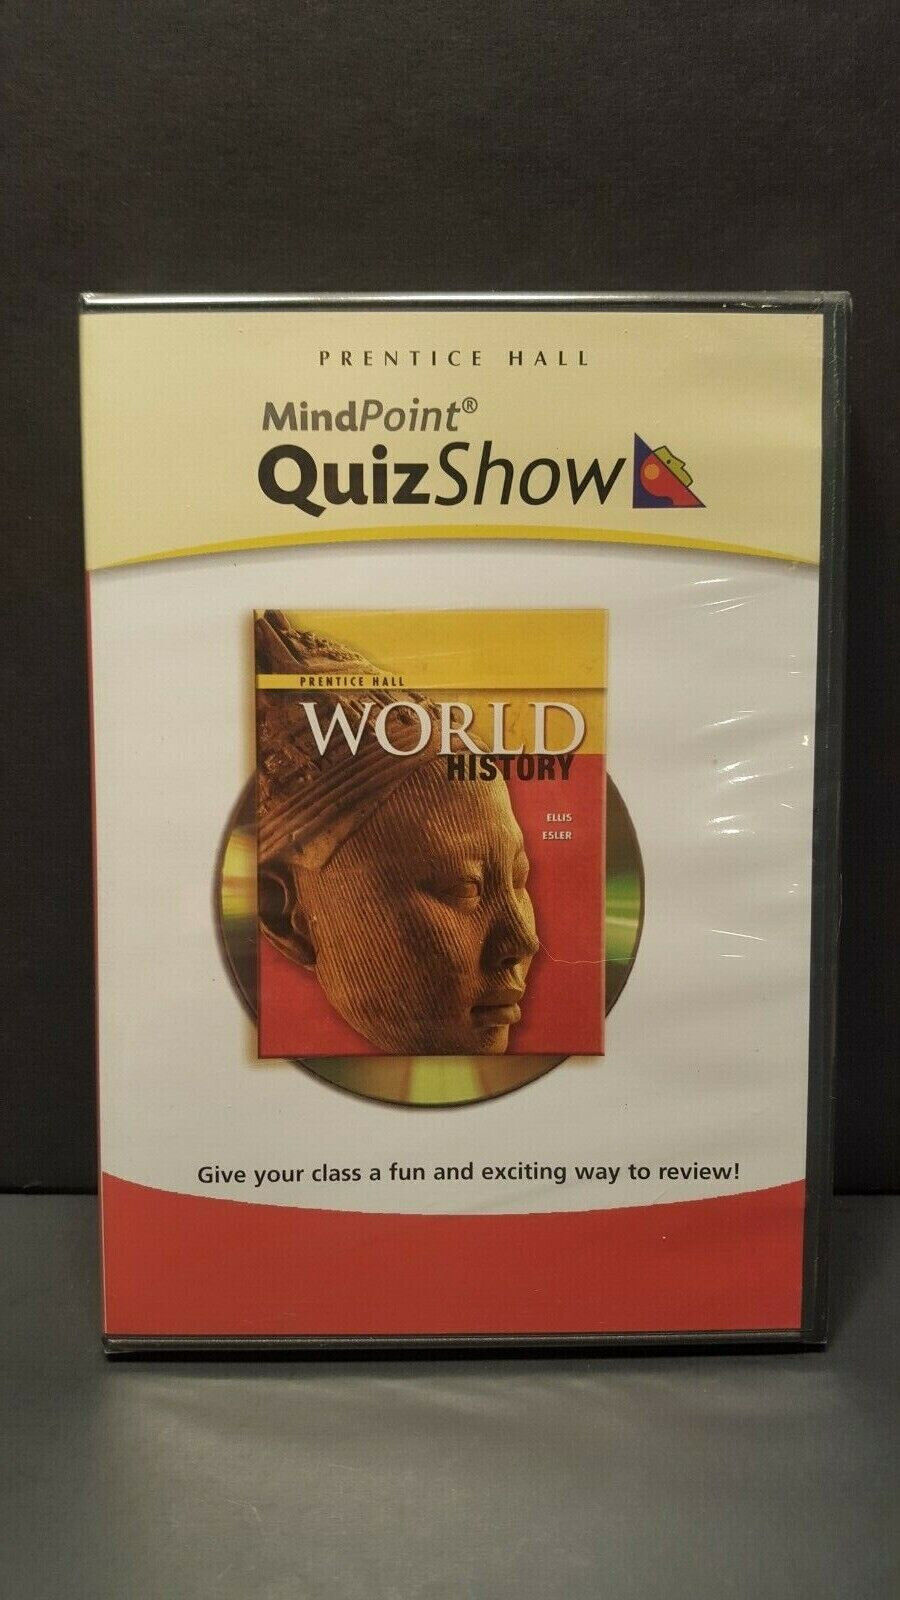 MIndpoint Quiz Show - WORLD HISTORY (Prentice Hall) (Sealed) / CD-ROM